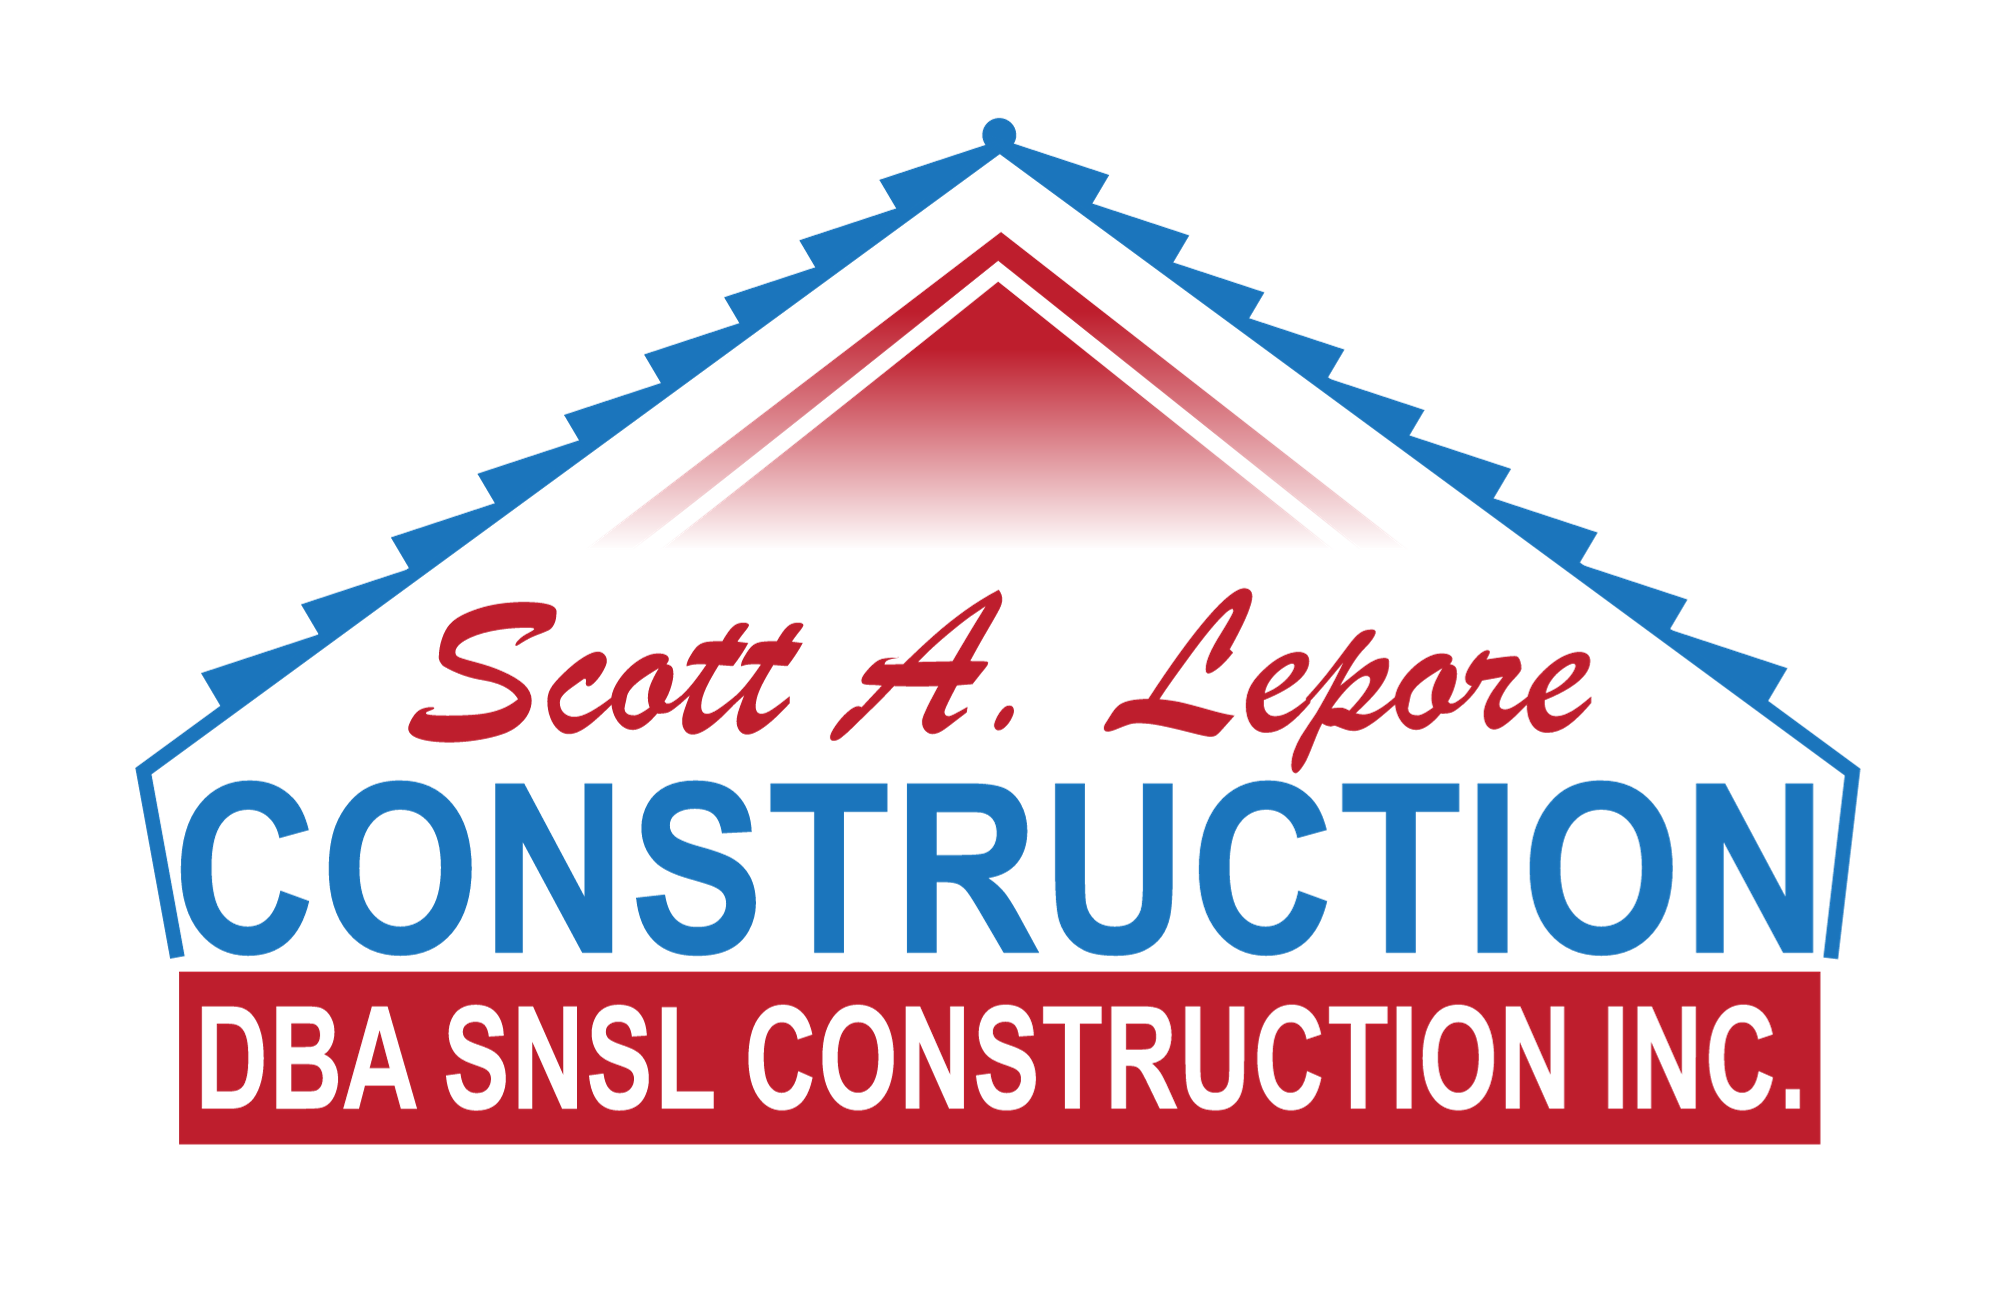 Scott A. Lepore Construction